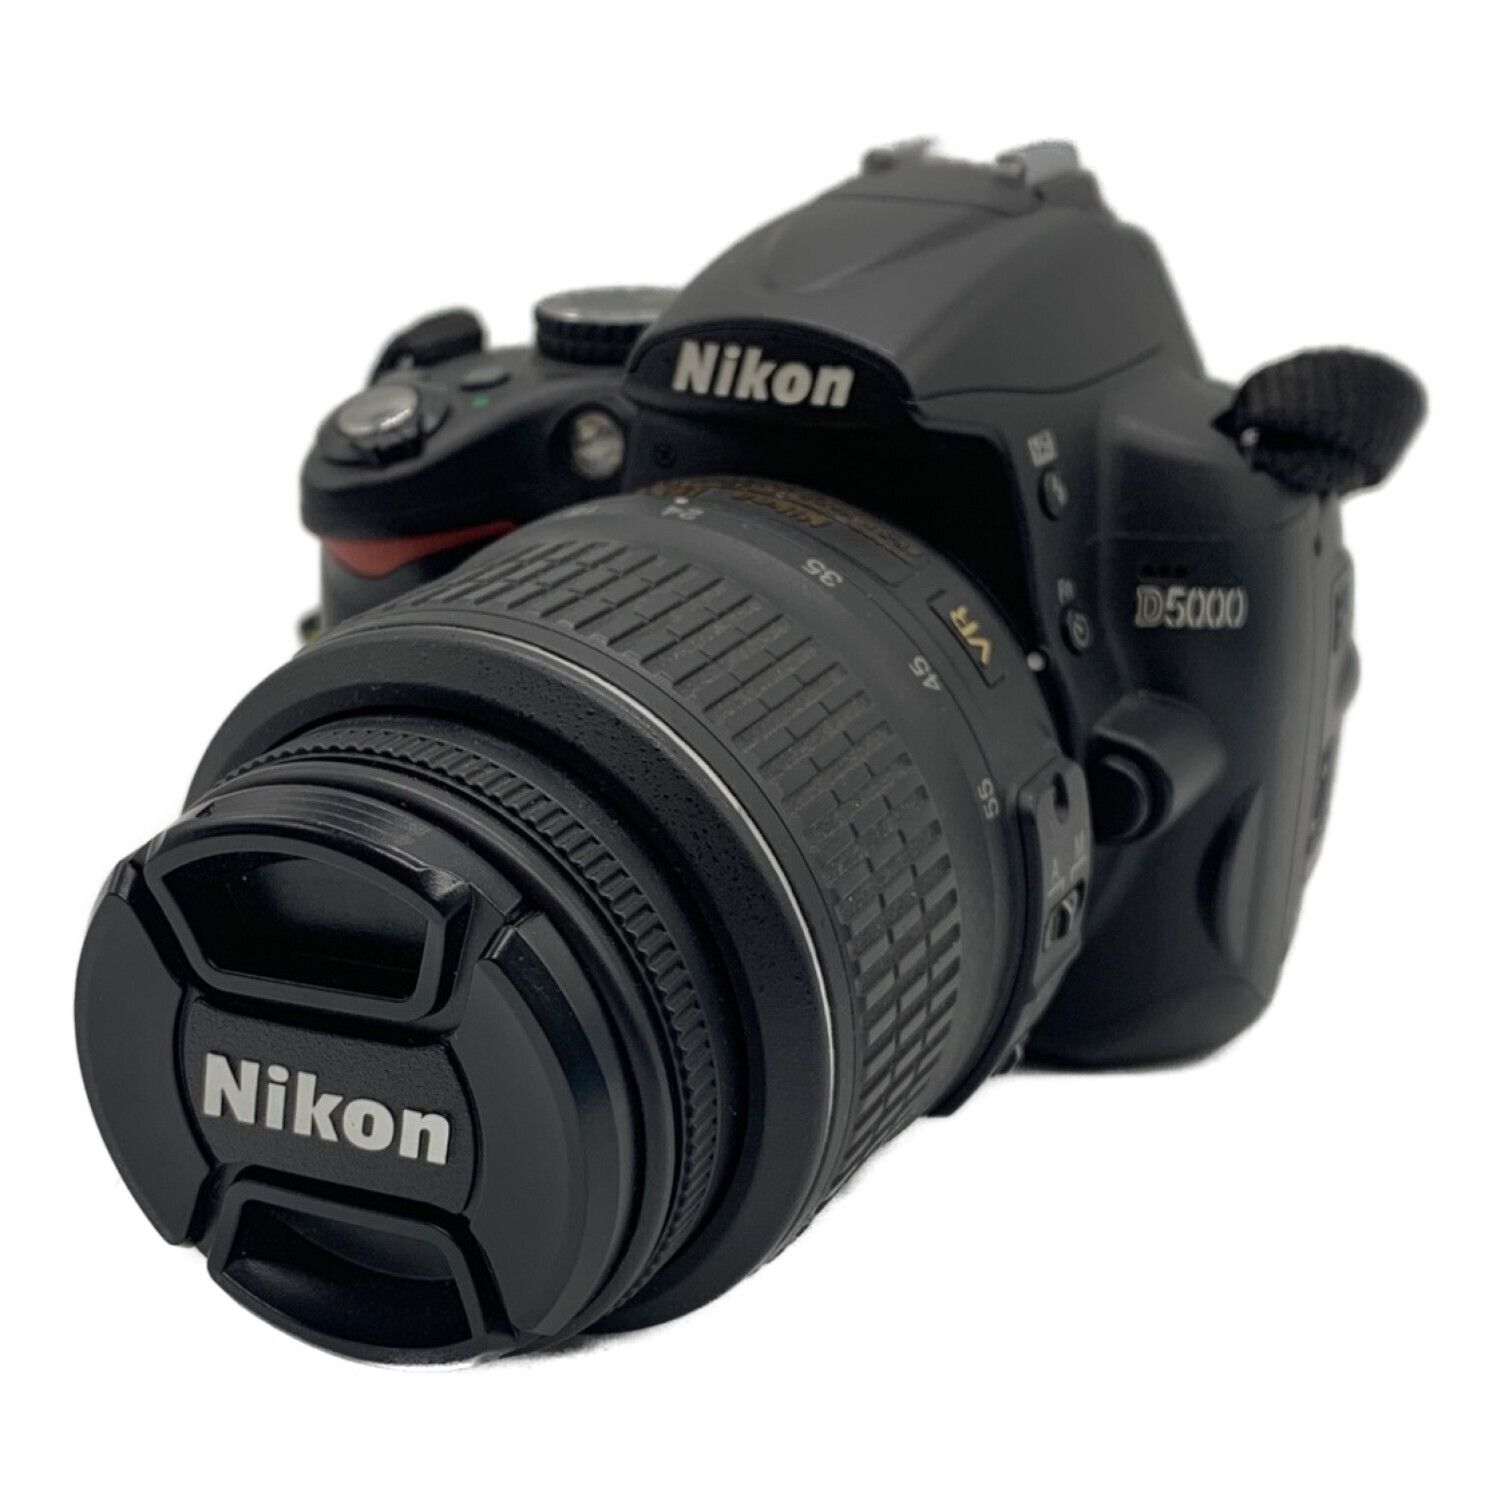 Nikon デジタル一眼レフカメラ D5000 ダブルズームキット D5000WZ - 1